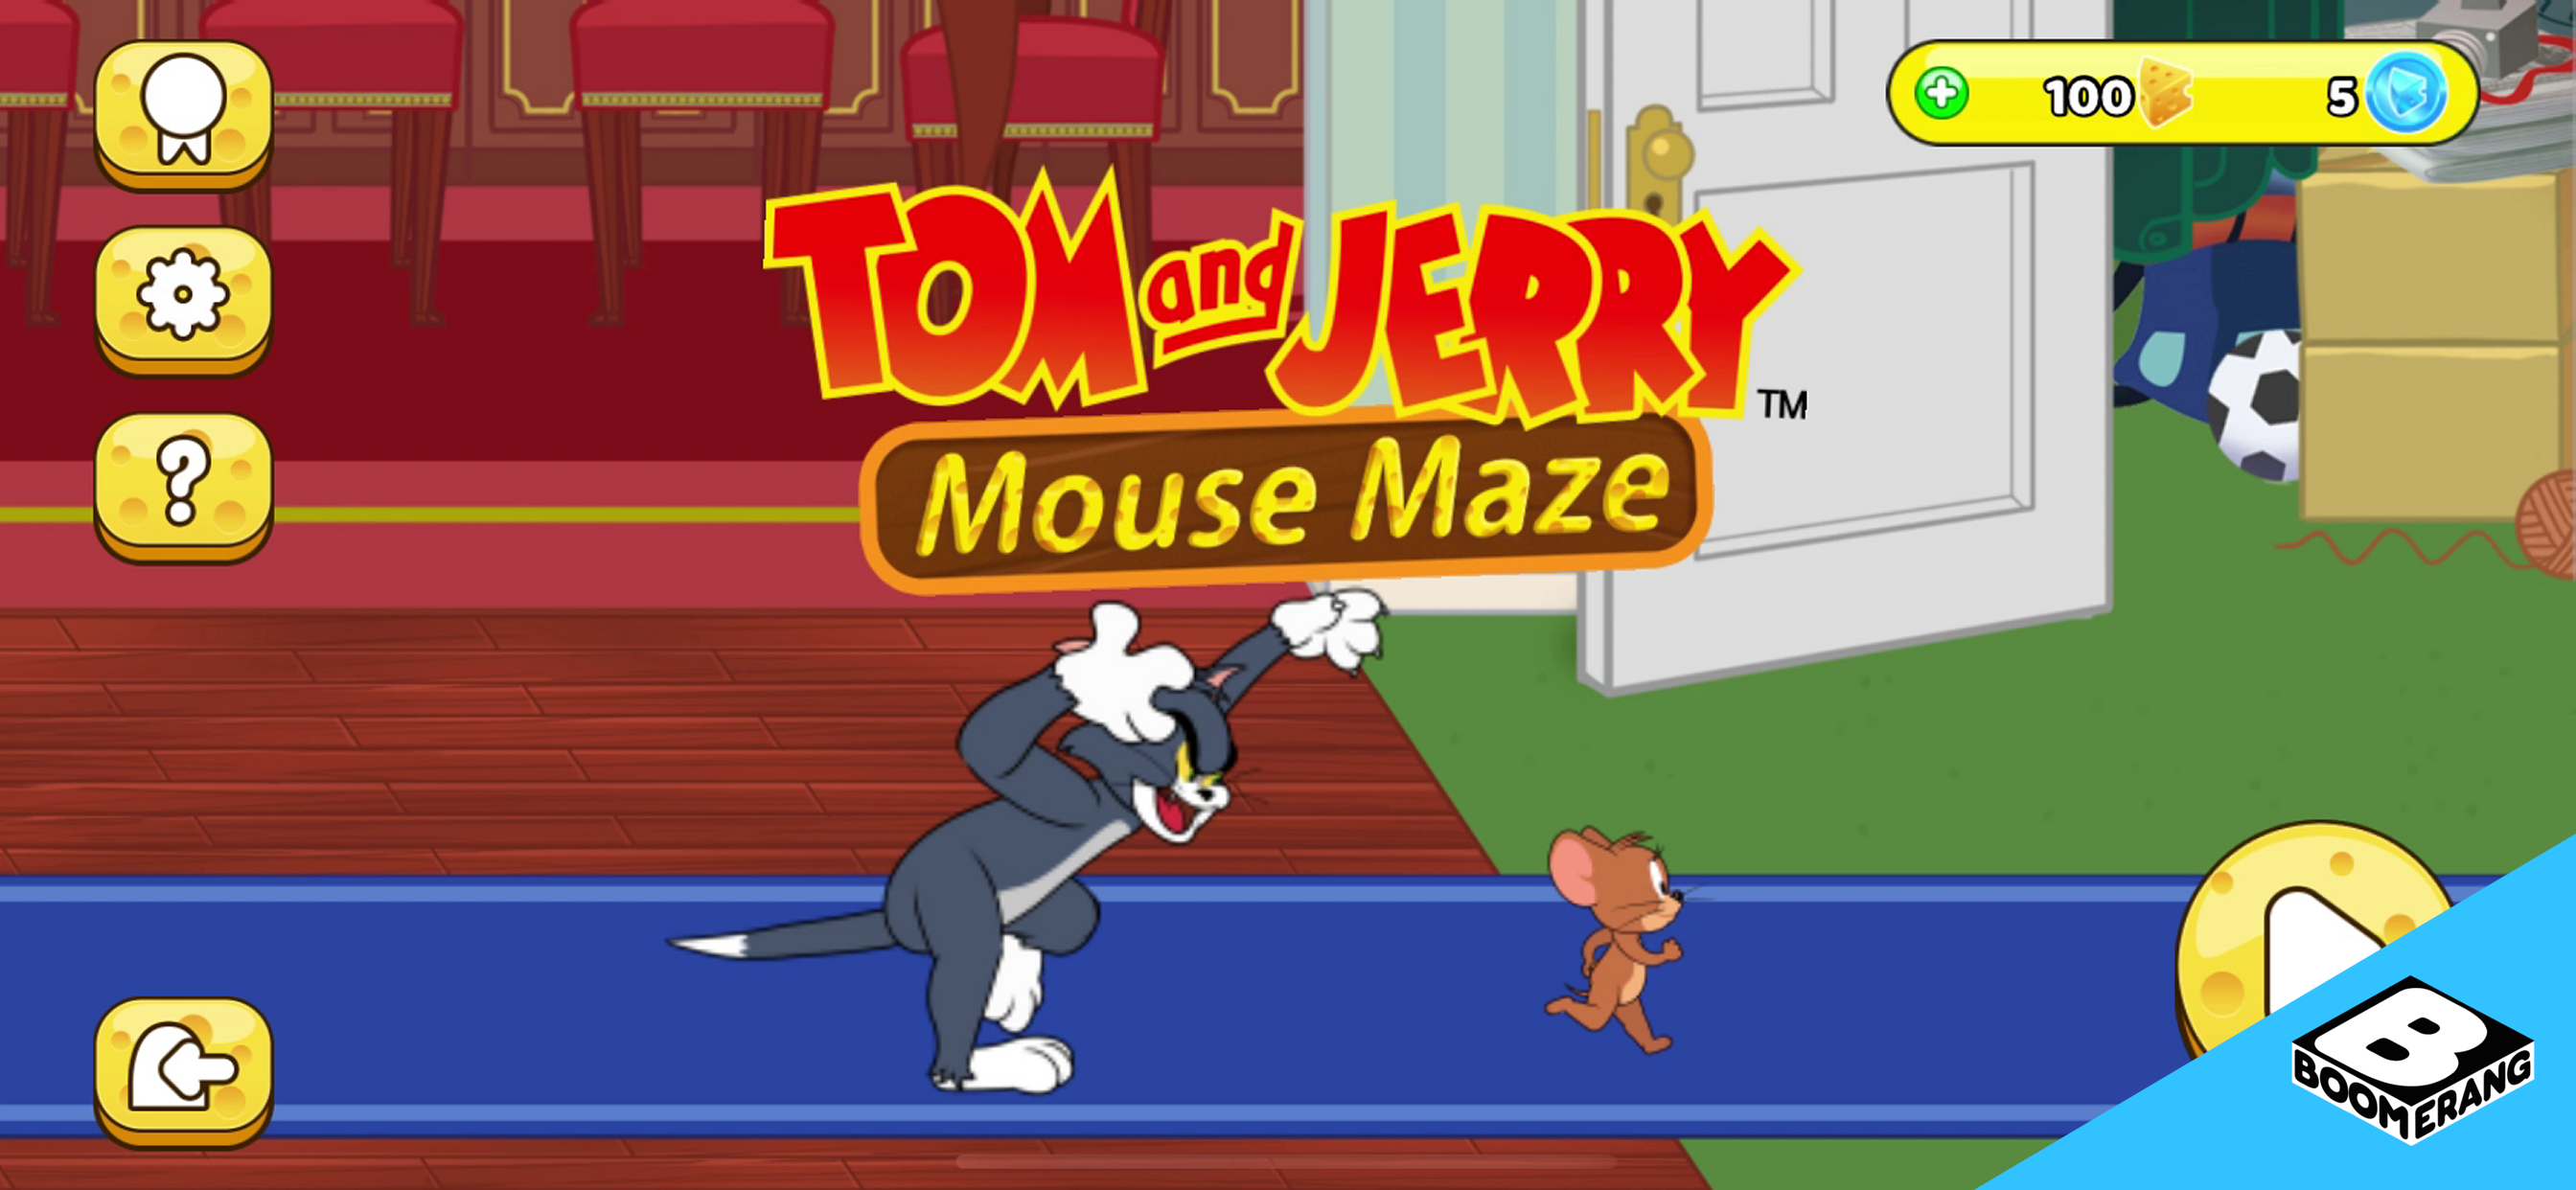 Screenshot 1 of Tom & Jerry: Mouse Maze 3.0.12-google